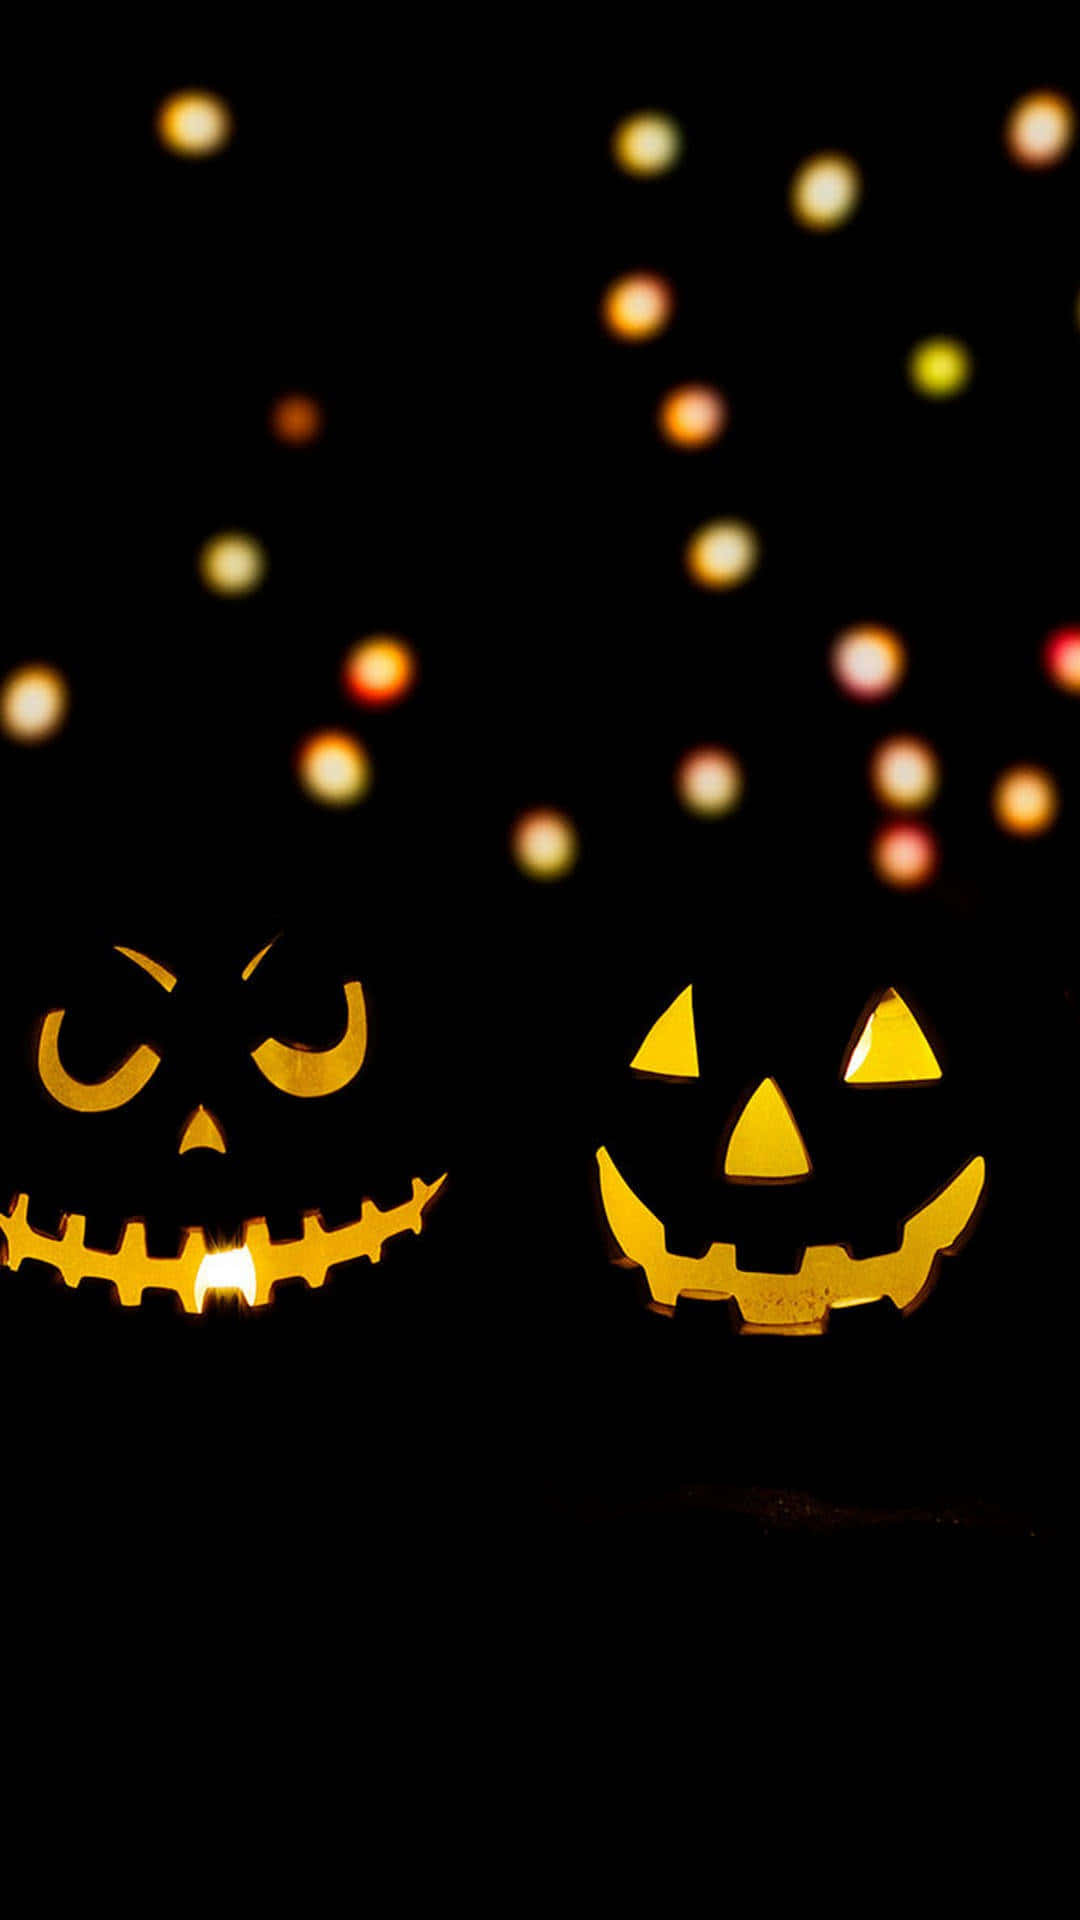 Halloween_ Jacko Lanterns_ Glowing_in_ Darkness.jpg Wallpaper